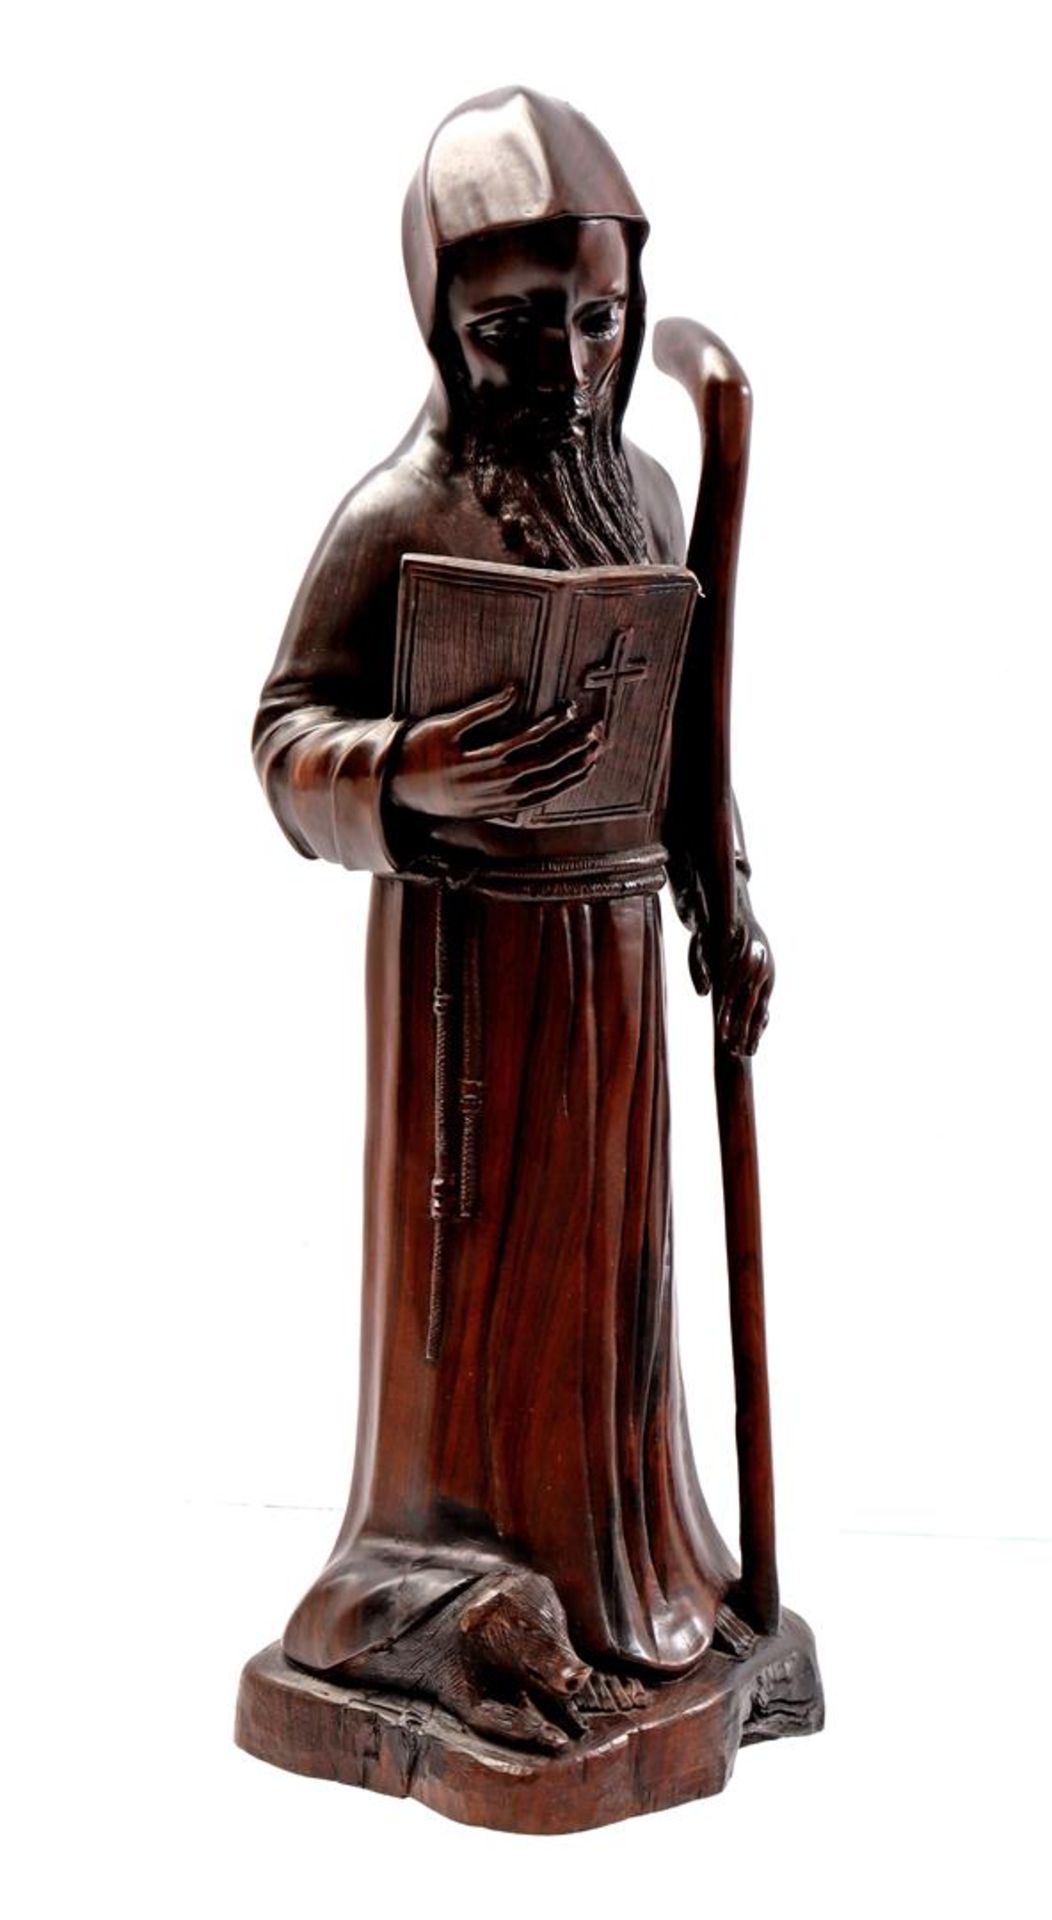 Coromandel wooden statue - Image 2 of 10